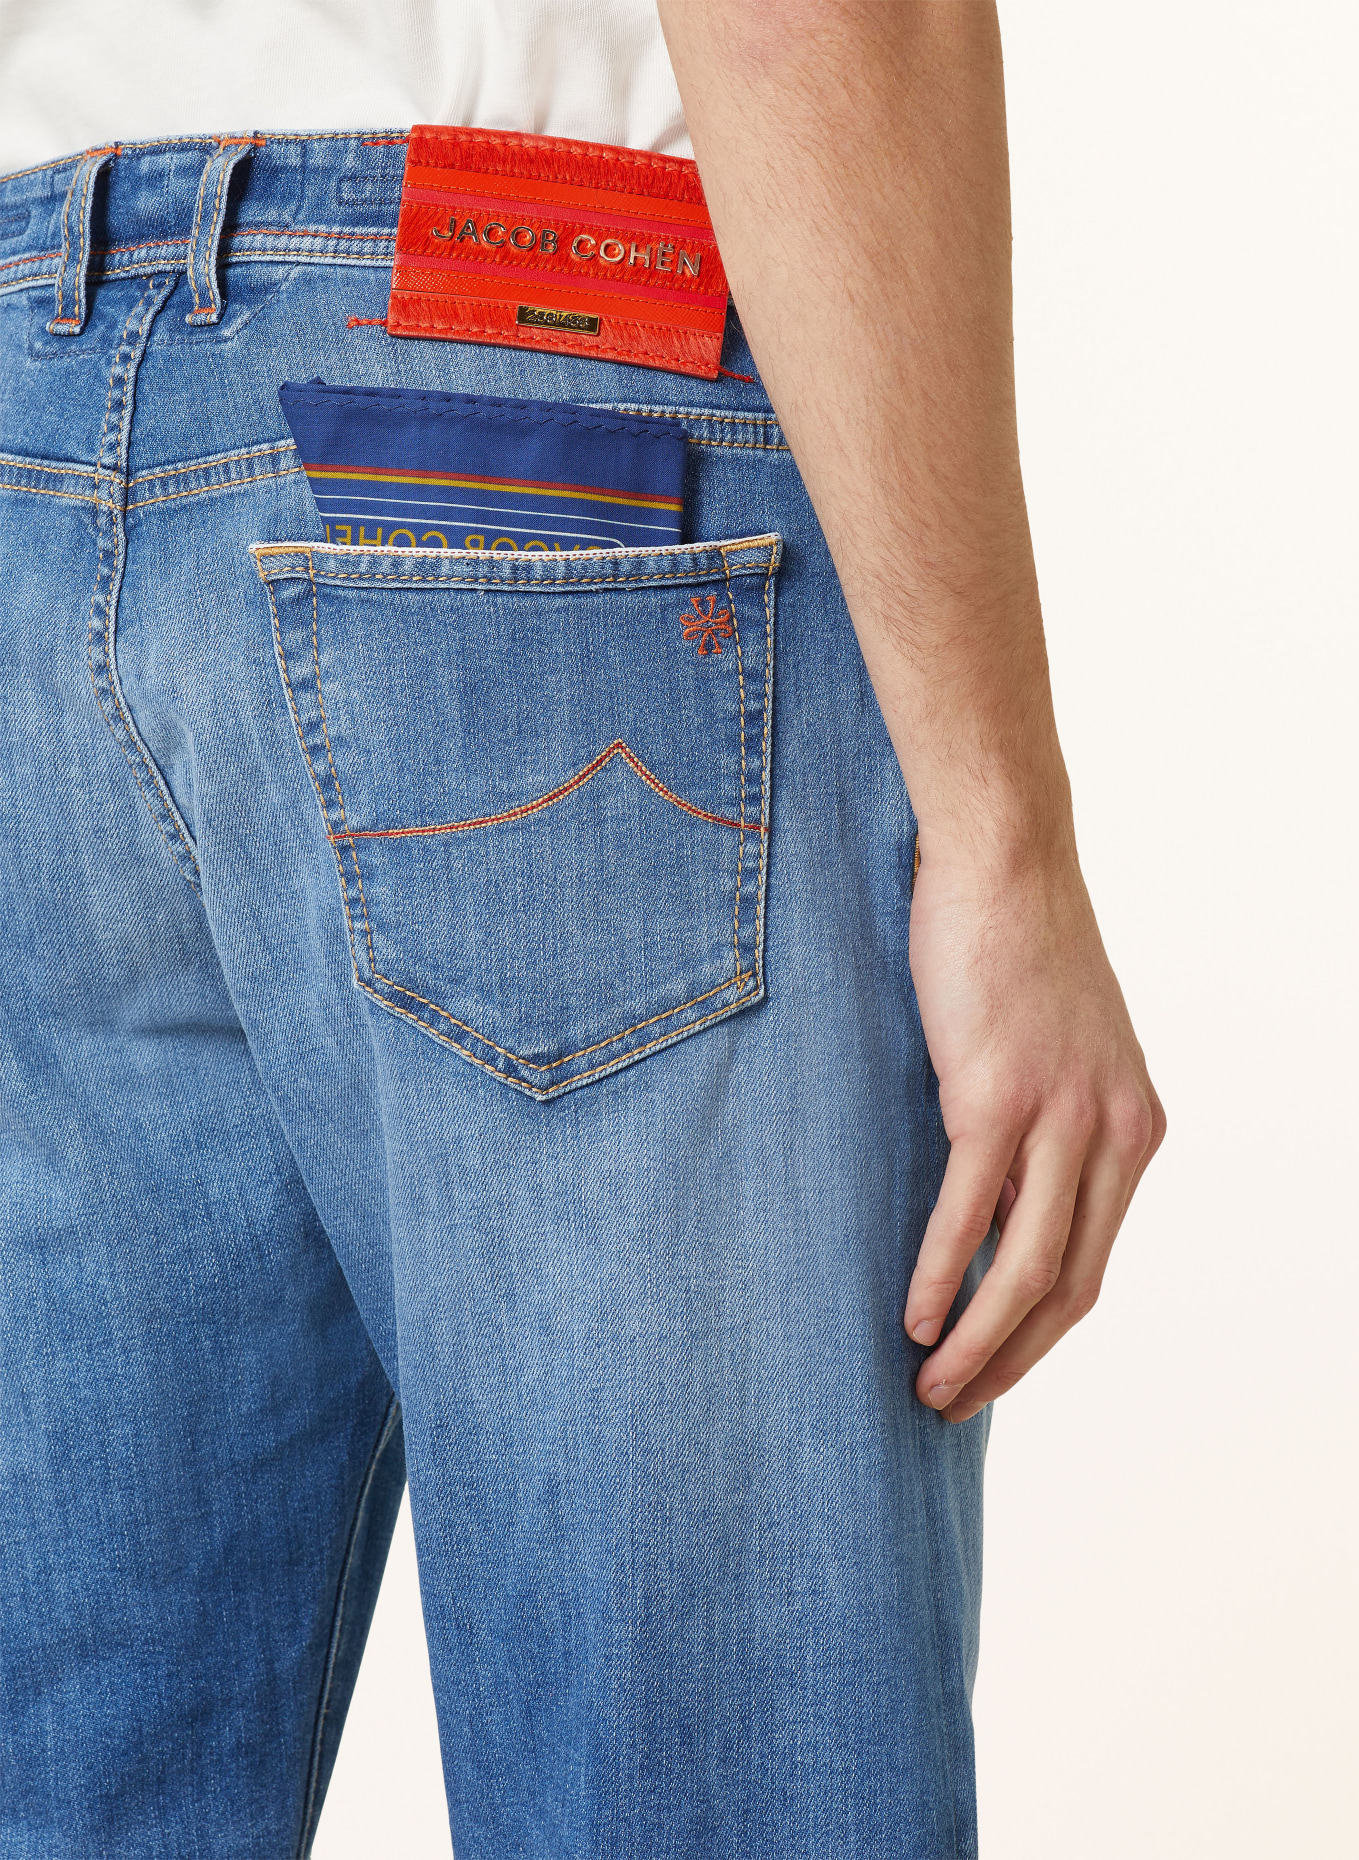 JACOB COHEN Jeans BARD Slim Fit, Farbe: 737D Light Blue (Bild 6)